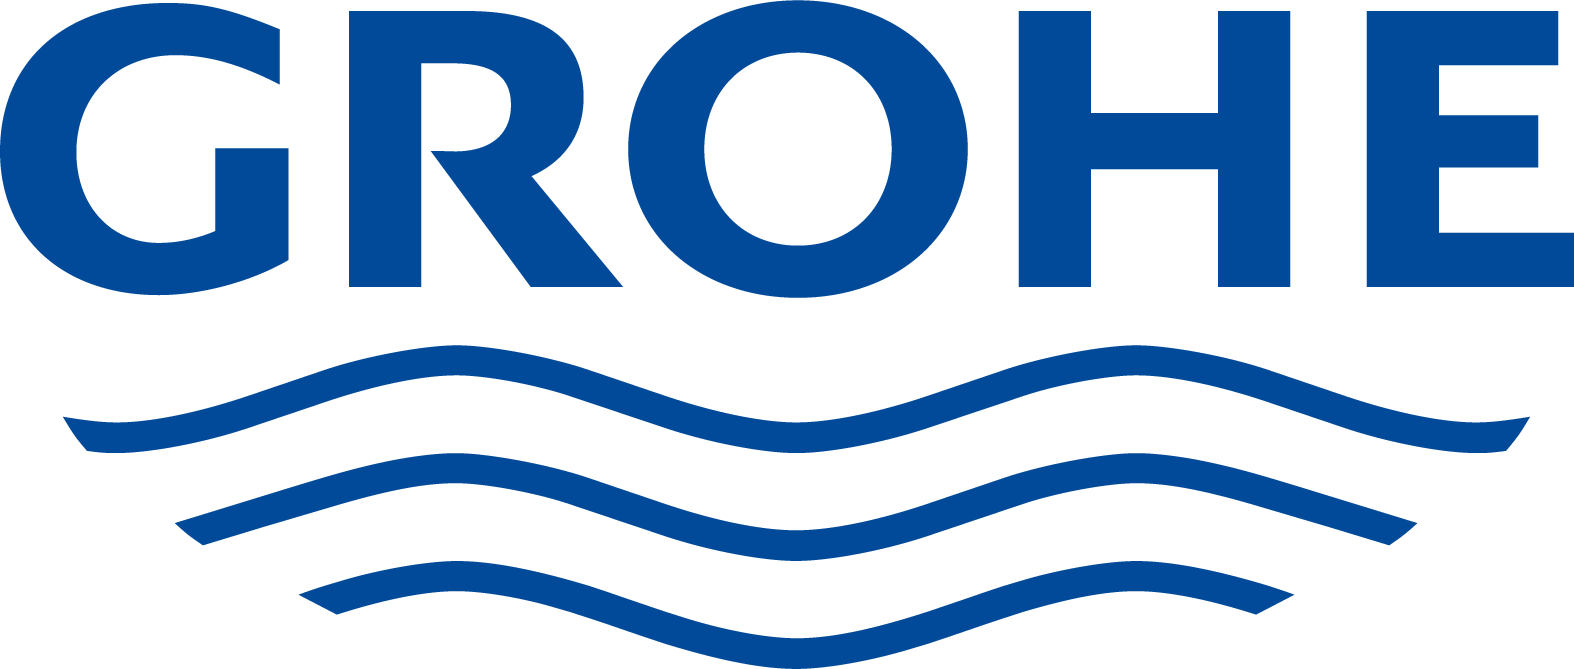 File:Grohe-logo.png - Wikipedia